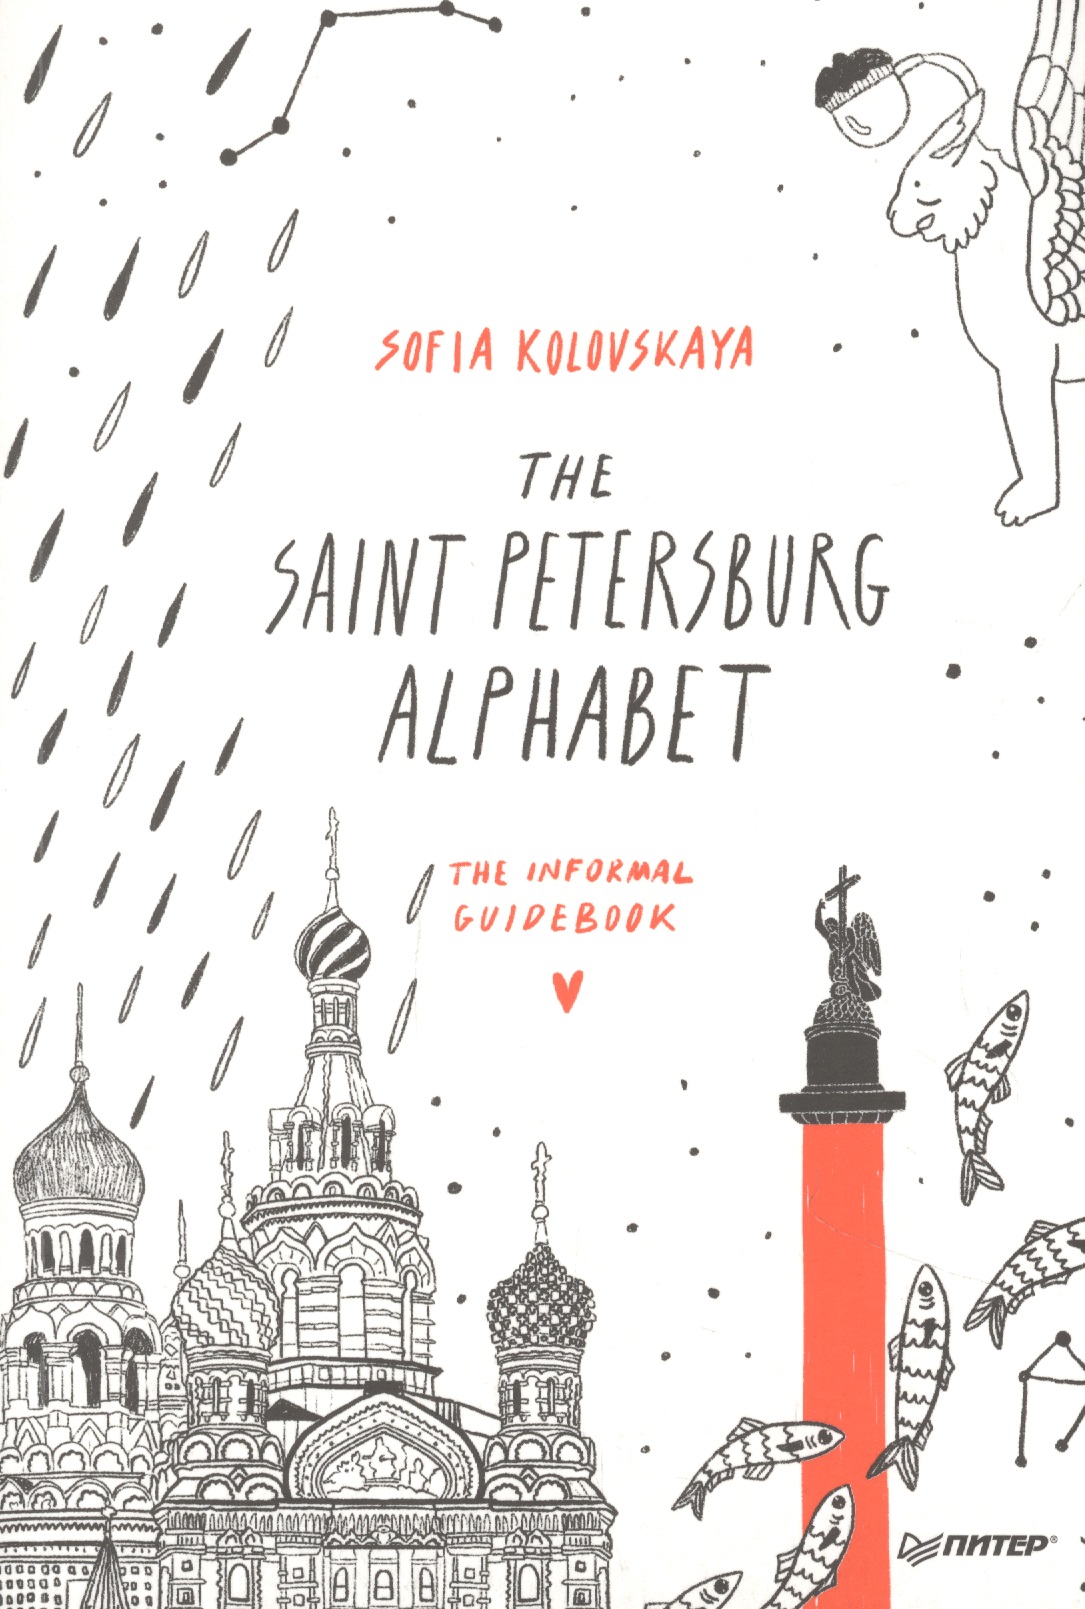 Коловская С. З. The Saint Petersburg Alphabet. The informal guidebook